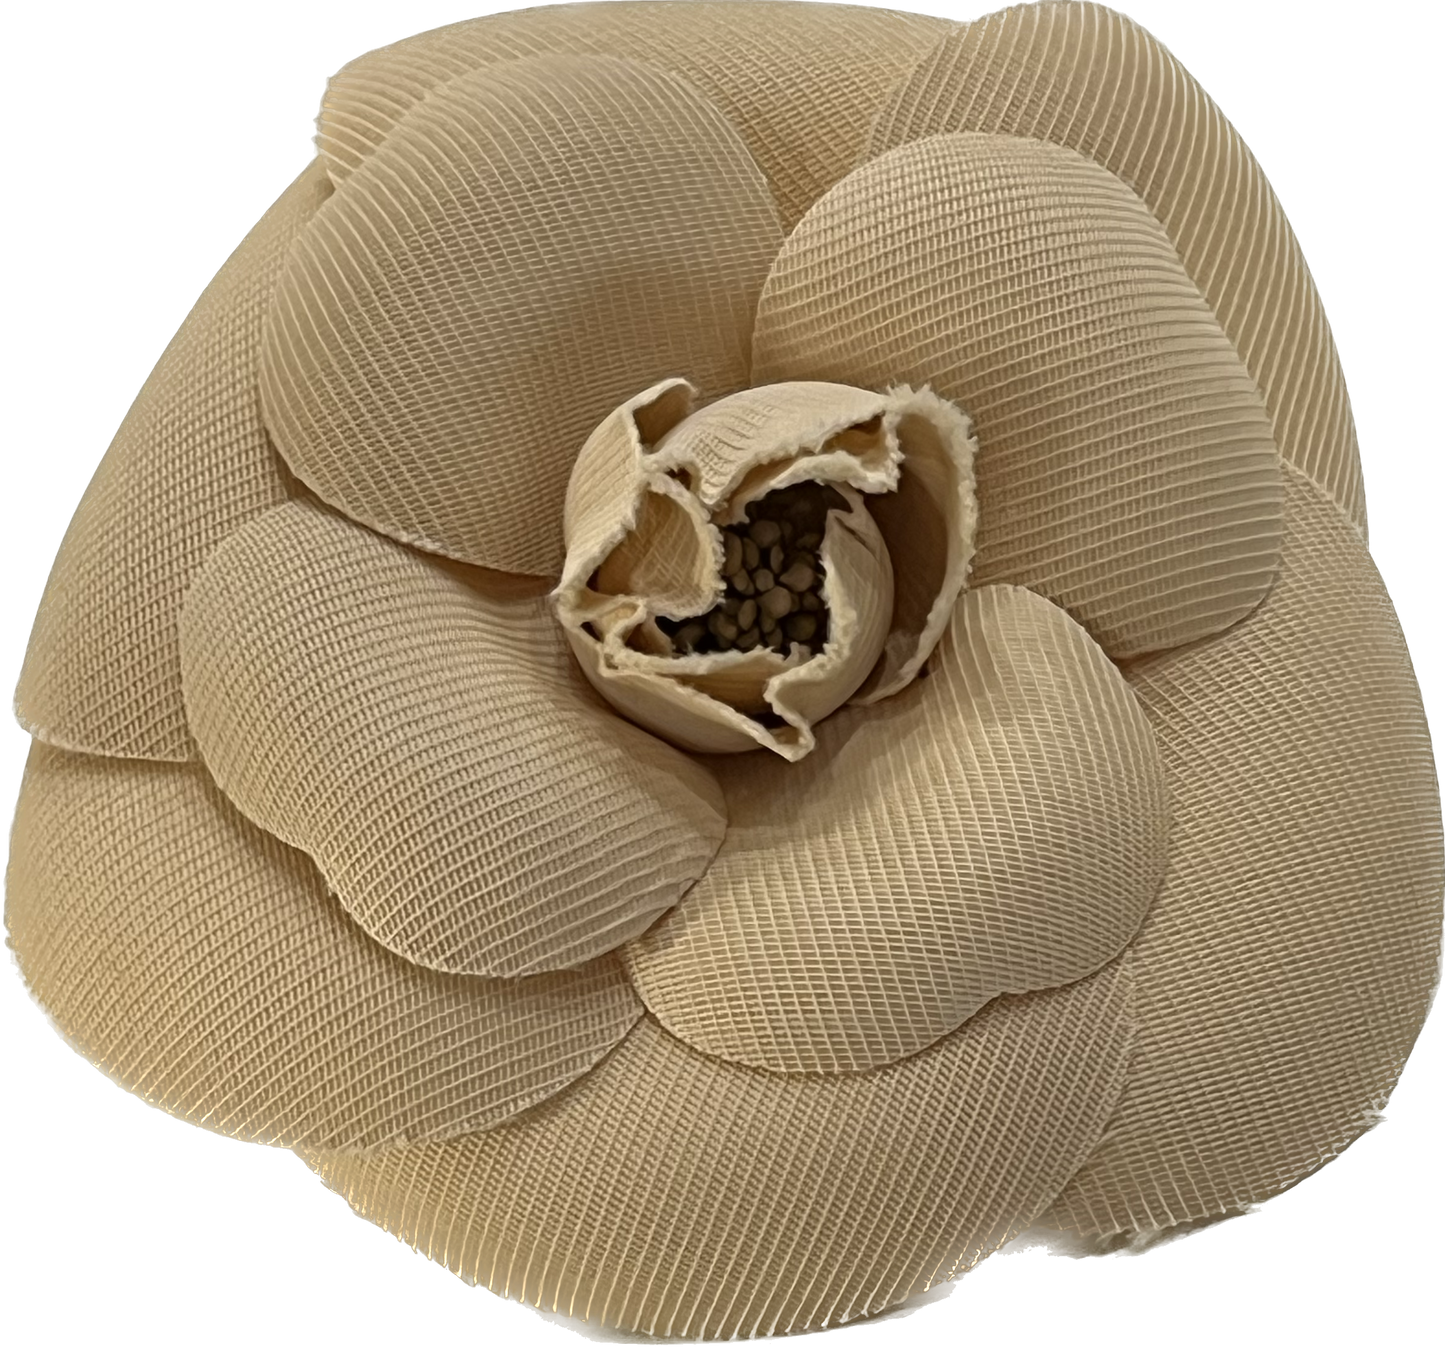 Chanel Camelia pin brooch